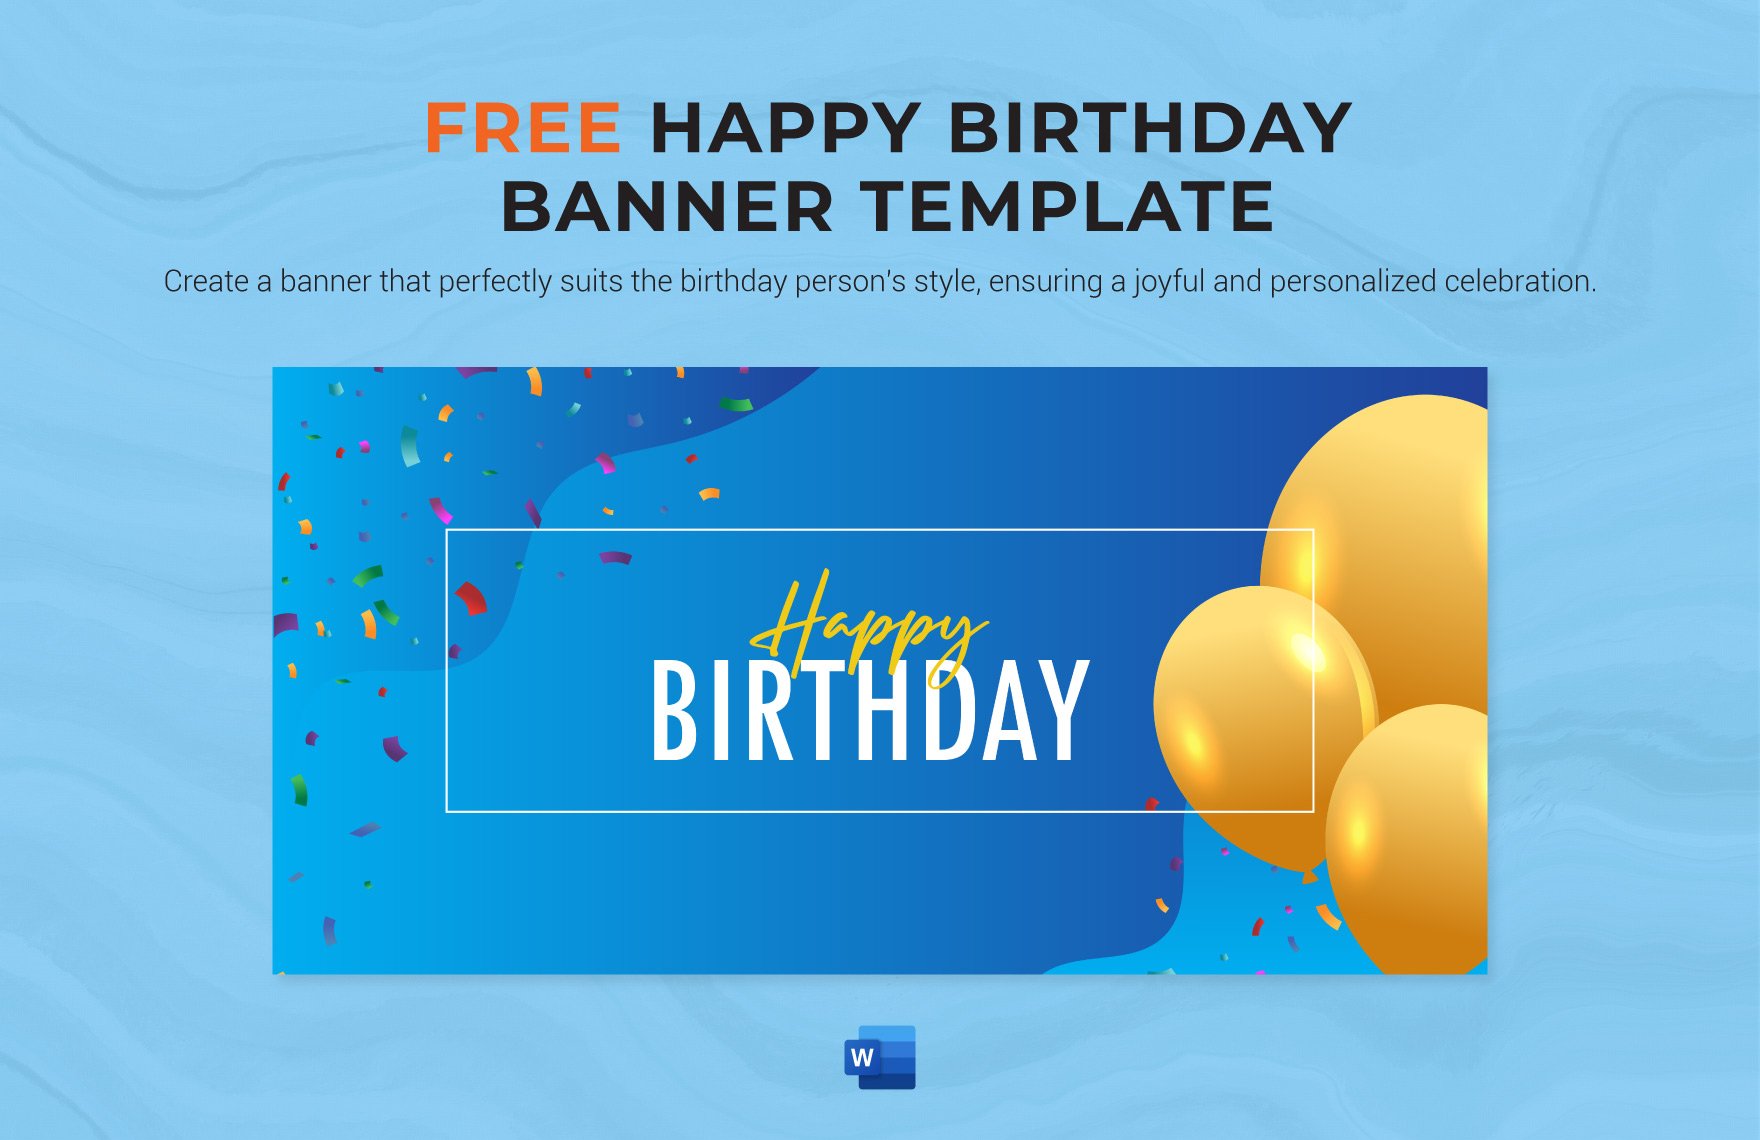 Free Happy Birthday Banner Template